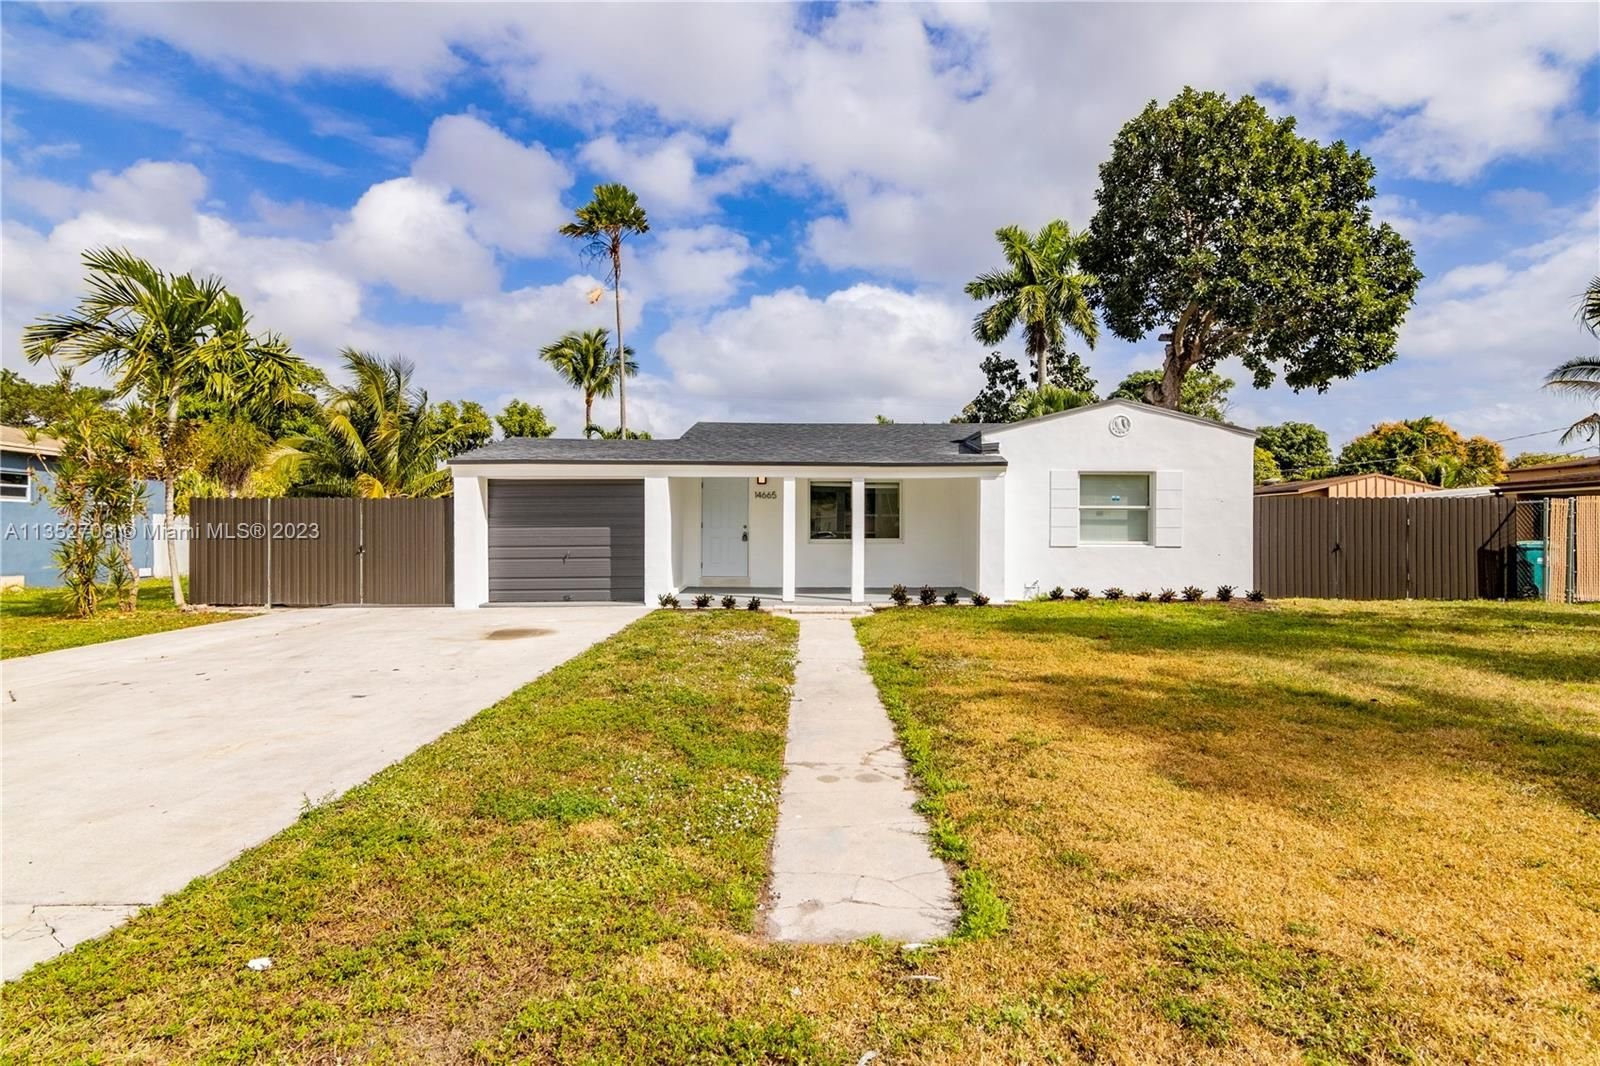 Real estate property located at 14665 Garden Dr, Miami-Dade County, Miami, FL